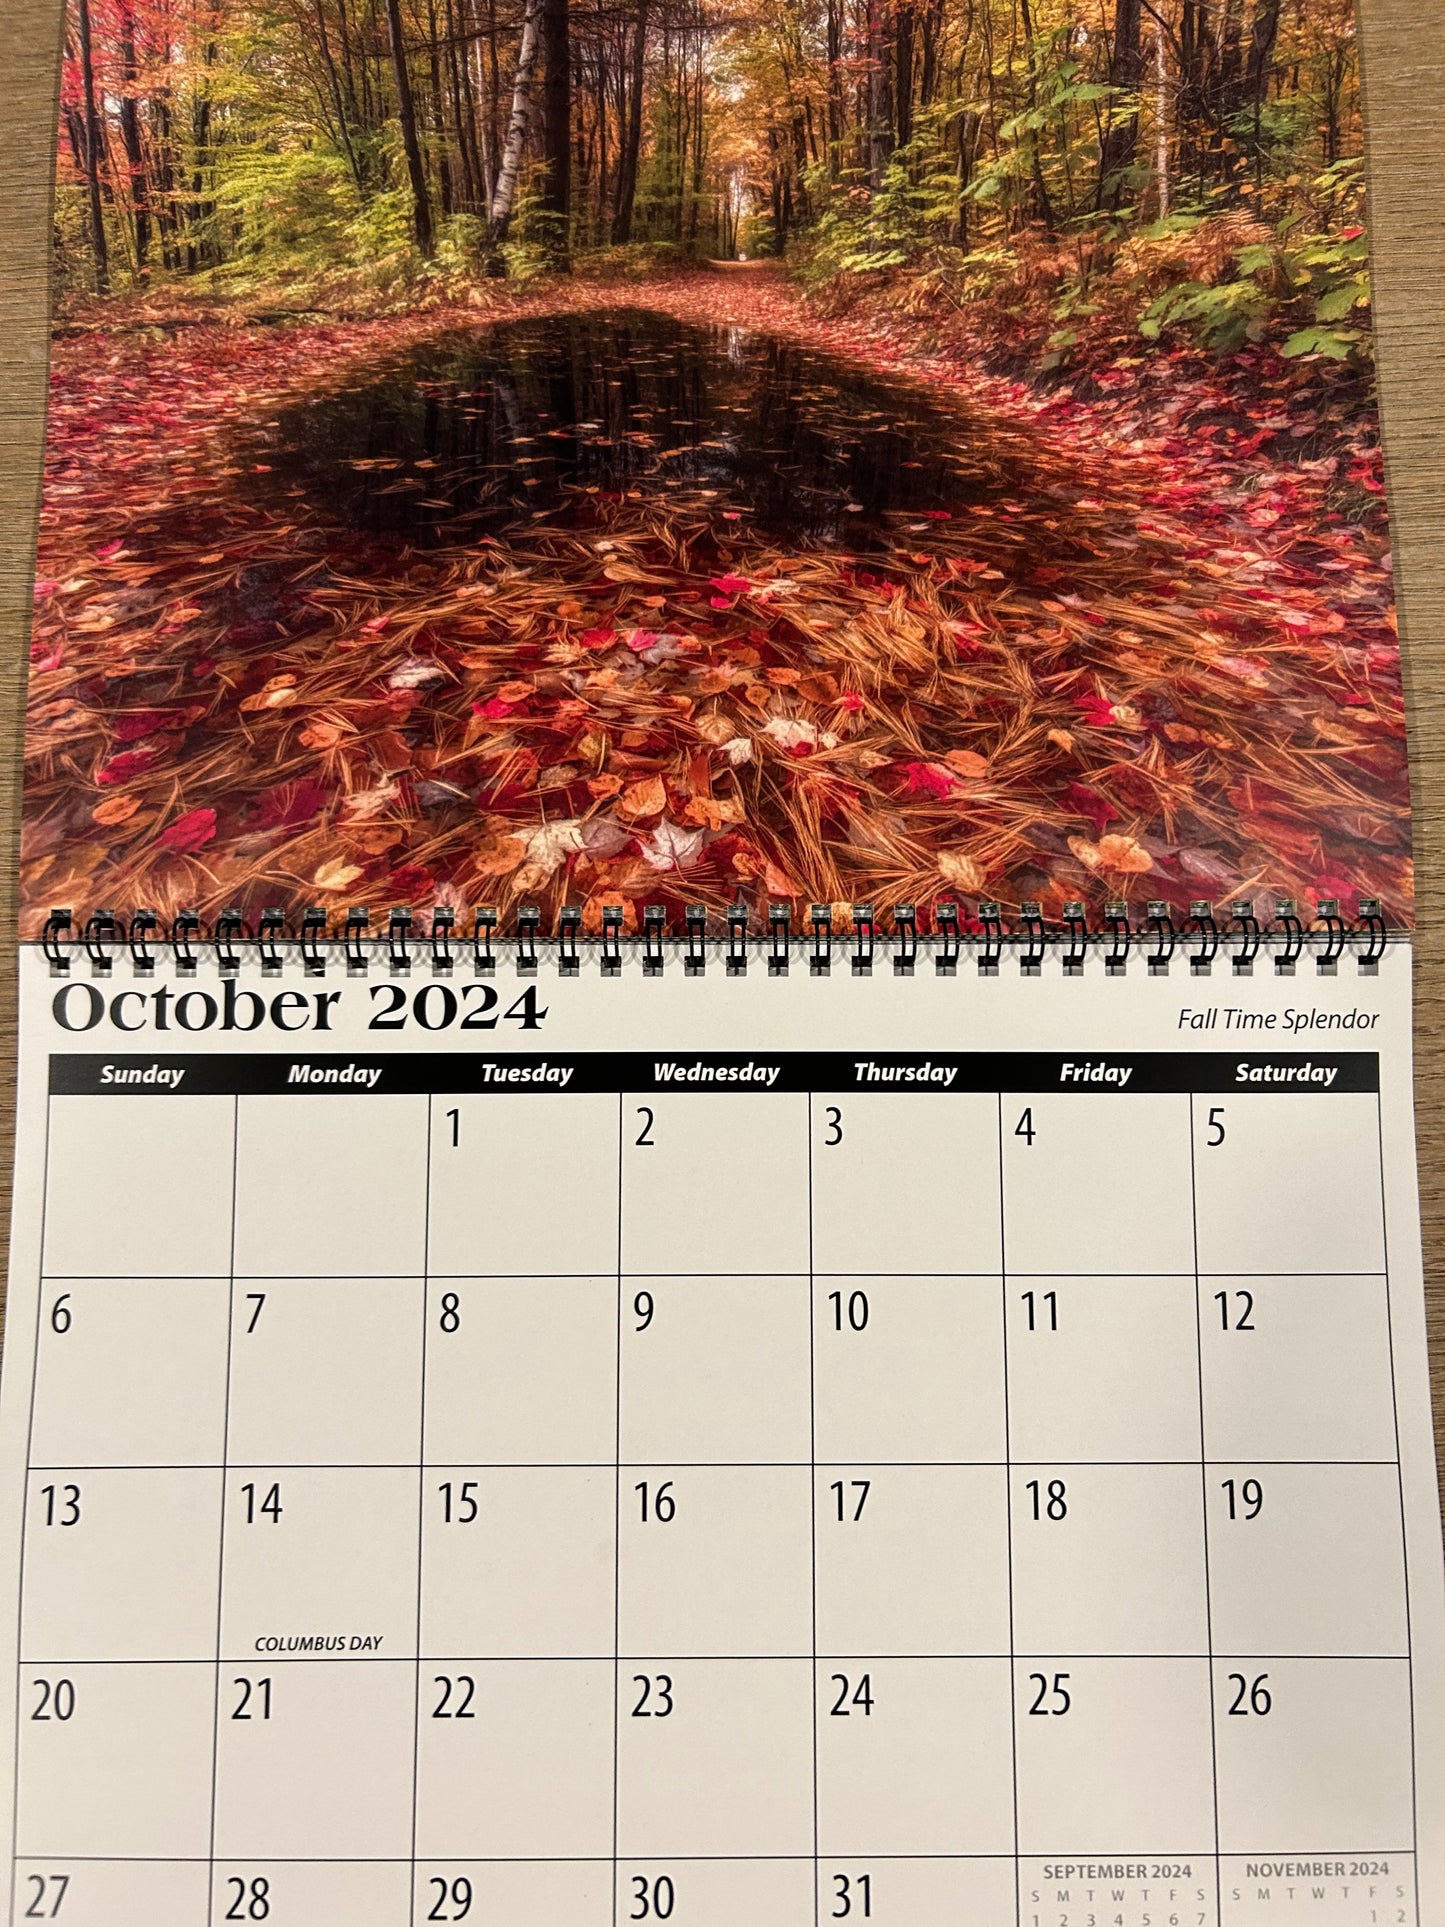 2024 Mark Lindsay Calendar